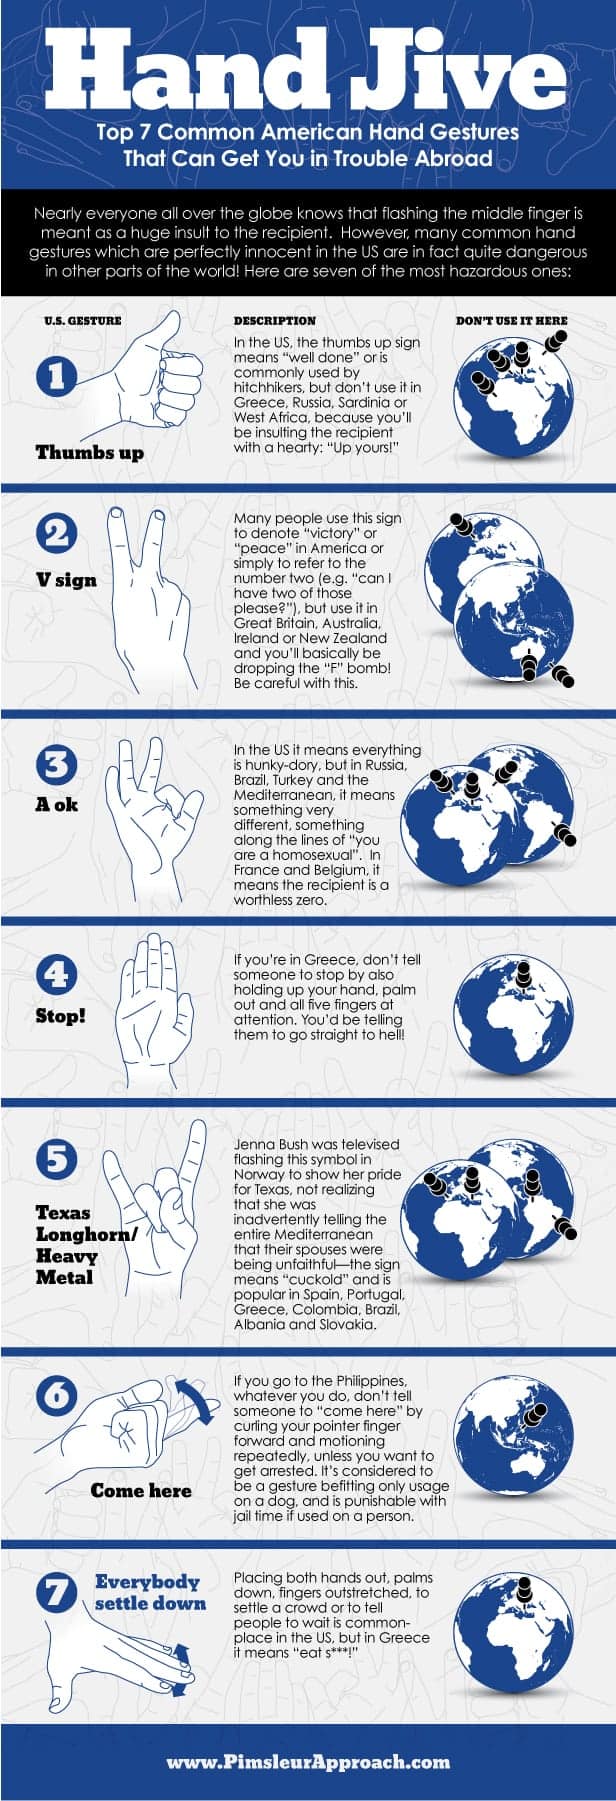 Hand jive infographic